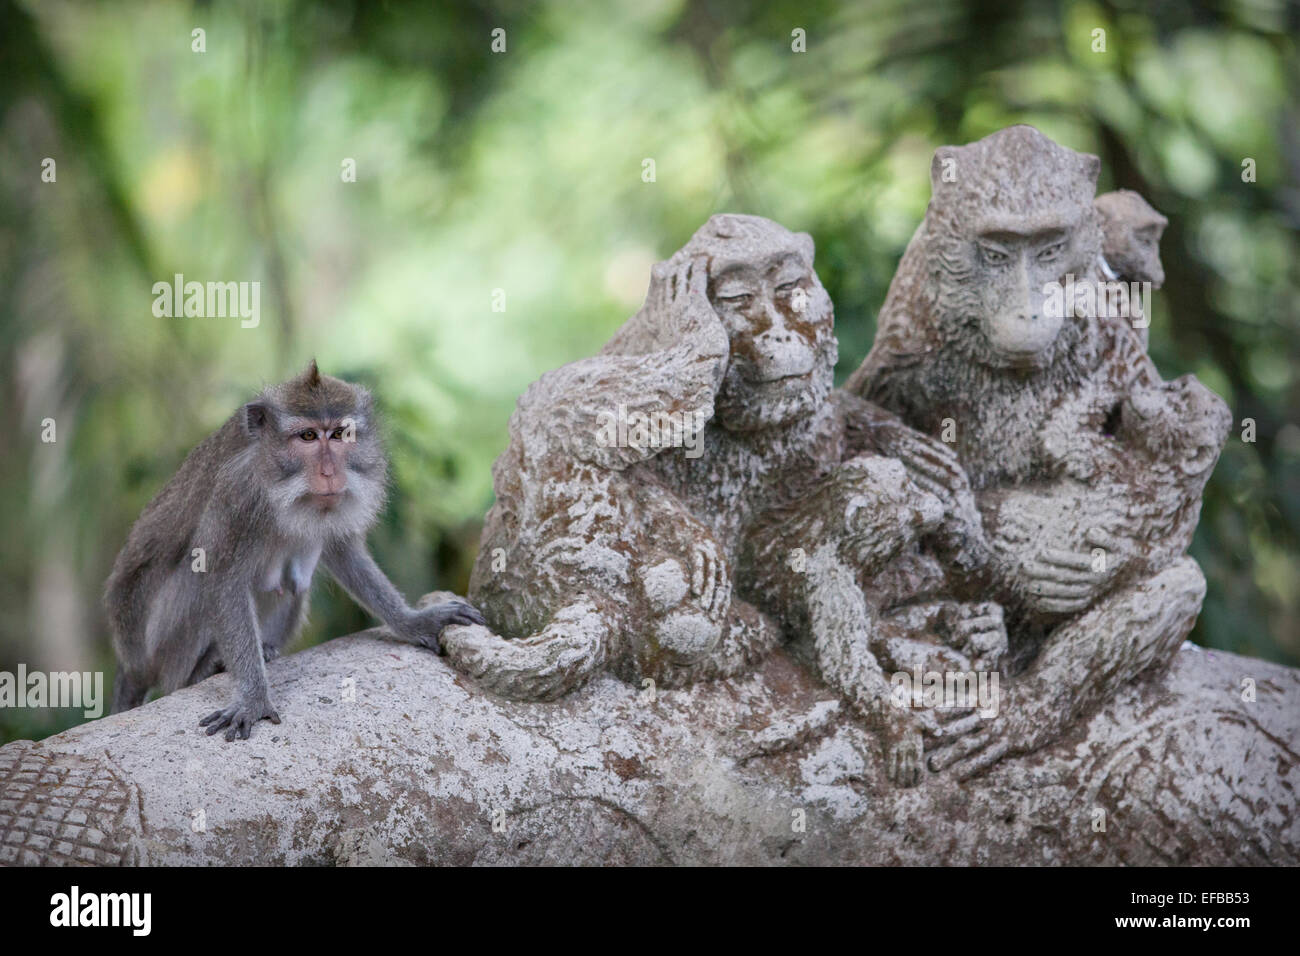 A Macaque monkey in Ubud, Bali, Indonesia Stock Photo